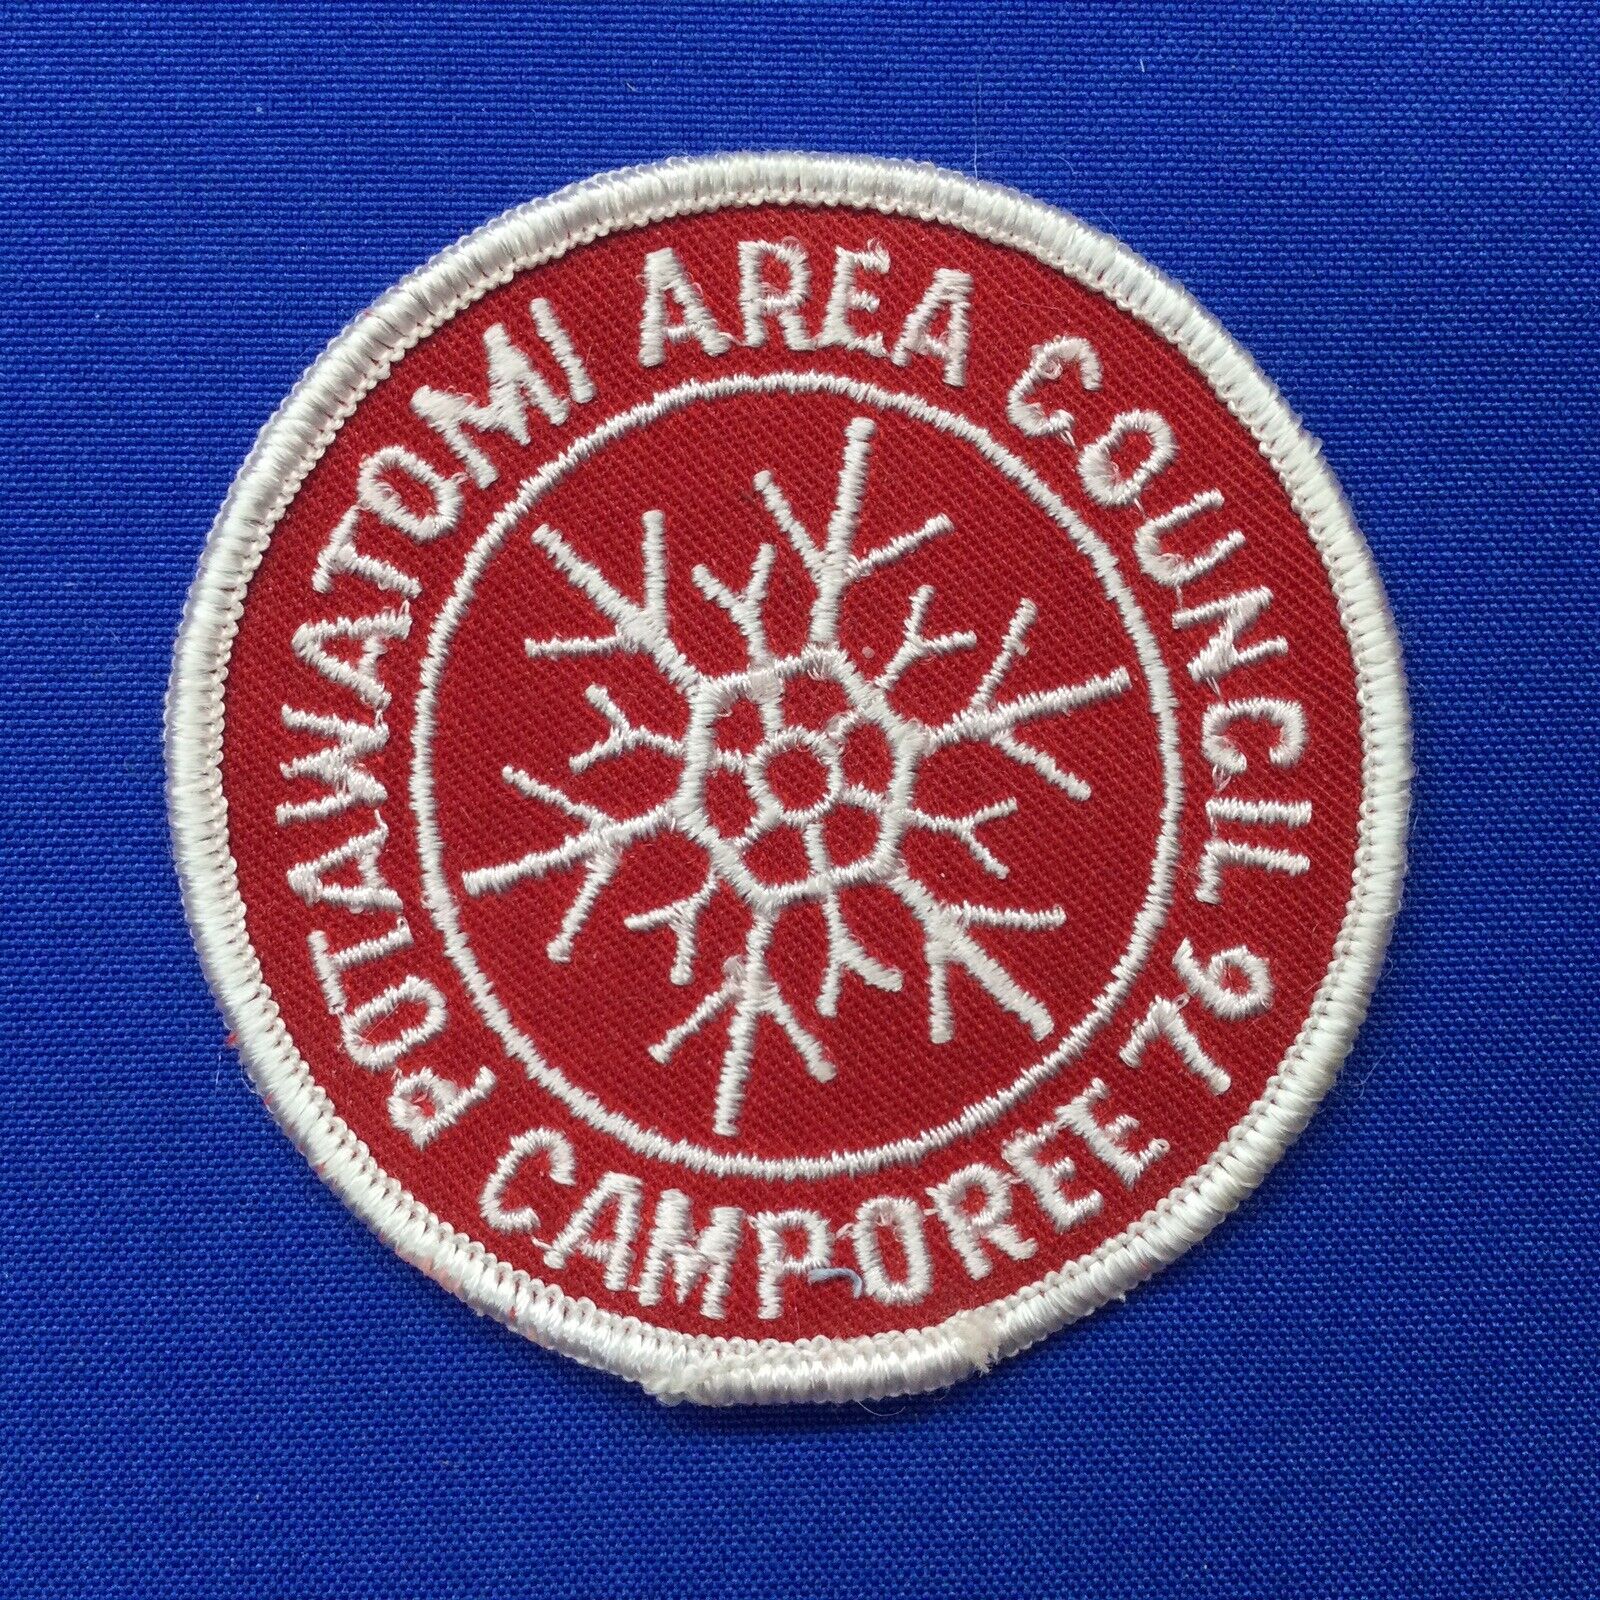 Boy Scout 1976 Potawatomi Area Council Camporee Patch 246B1